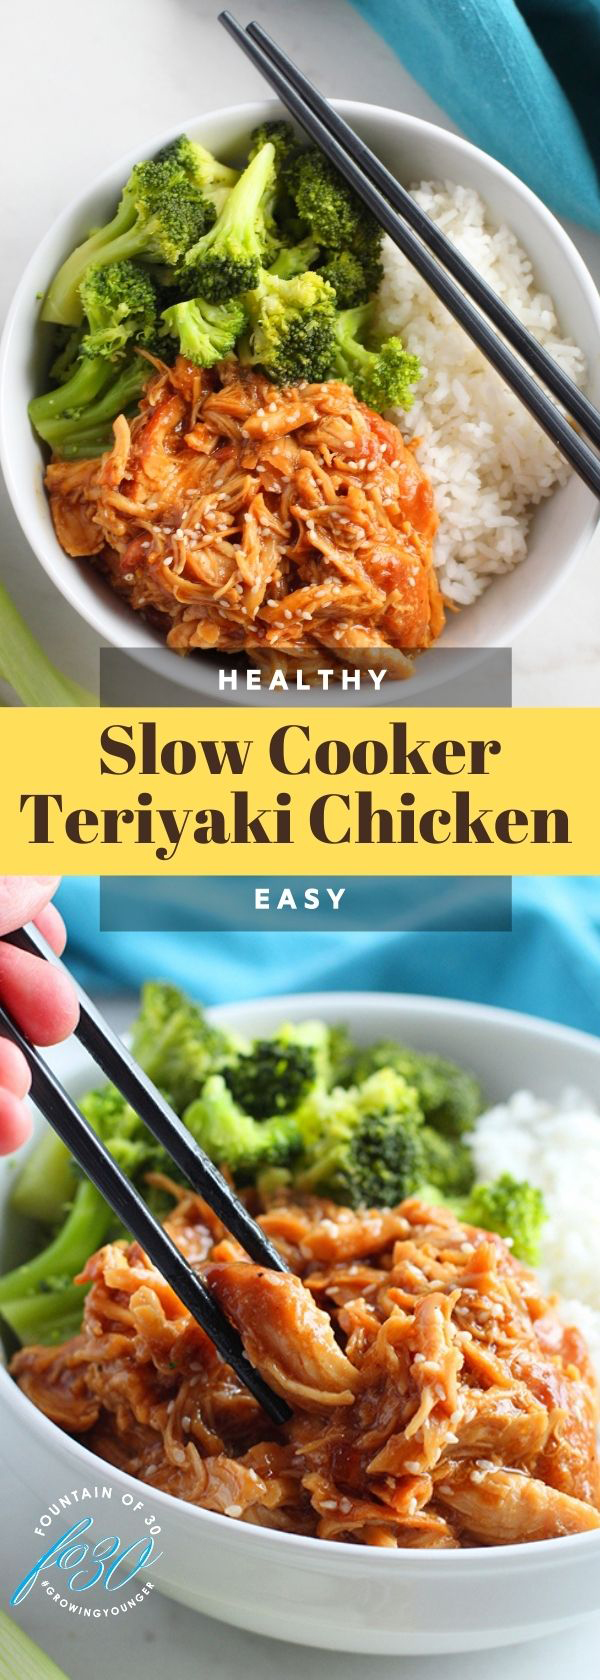 teriyaki chicken in the slow cooker